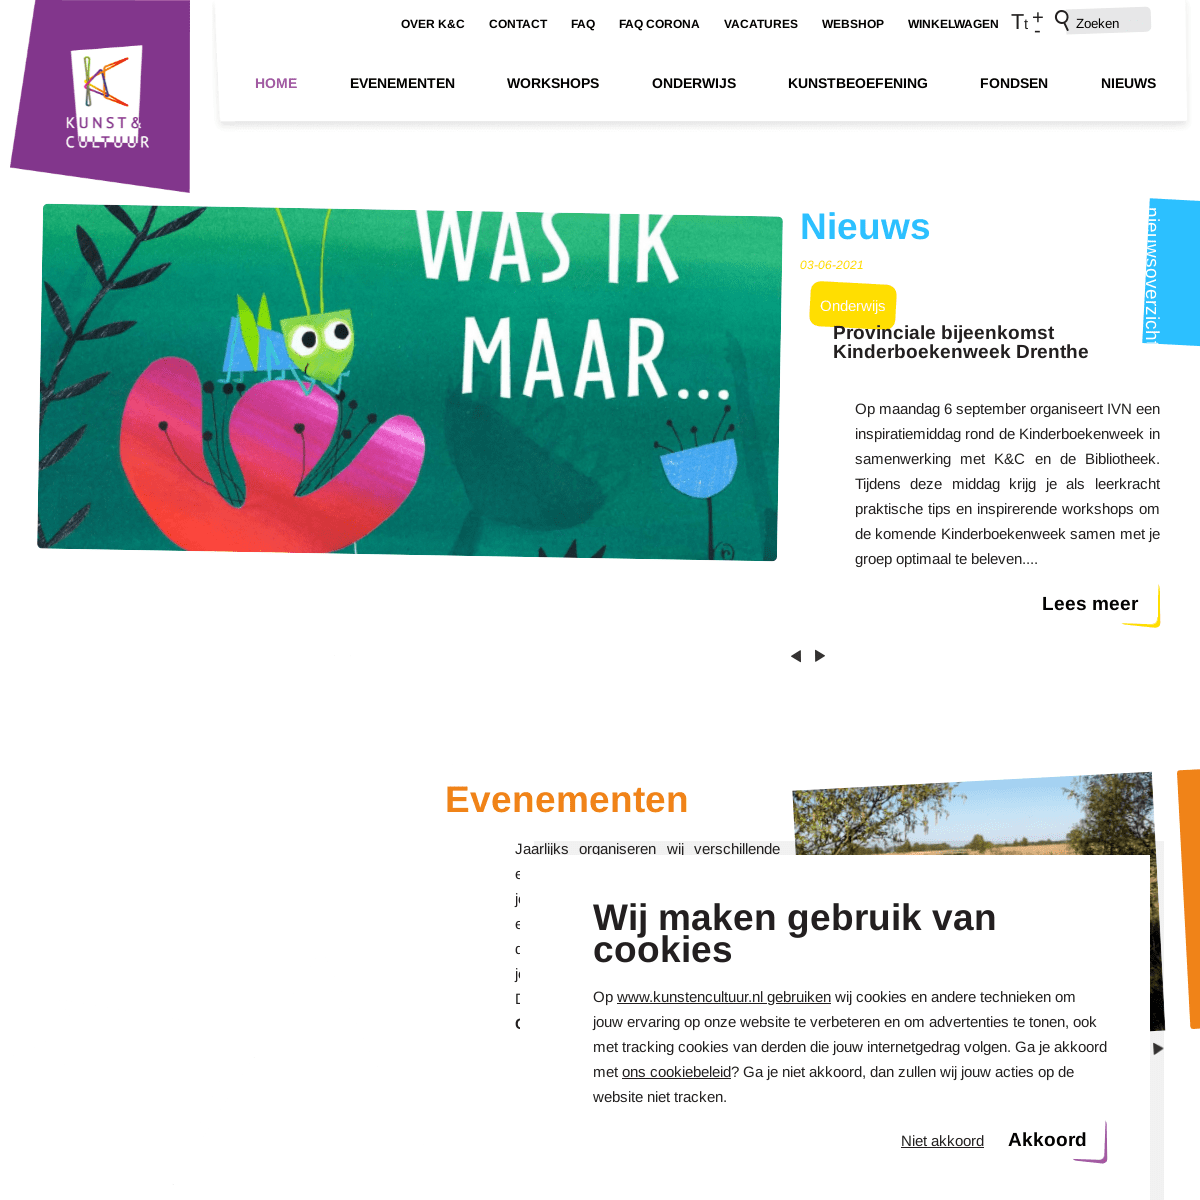 A complete backup of https://kunstencultuur.nl